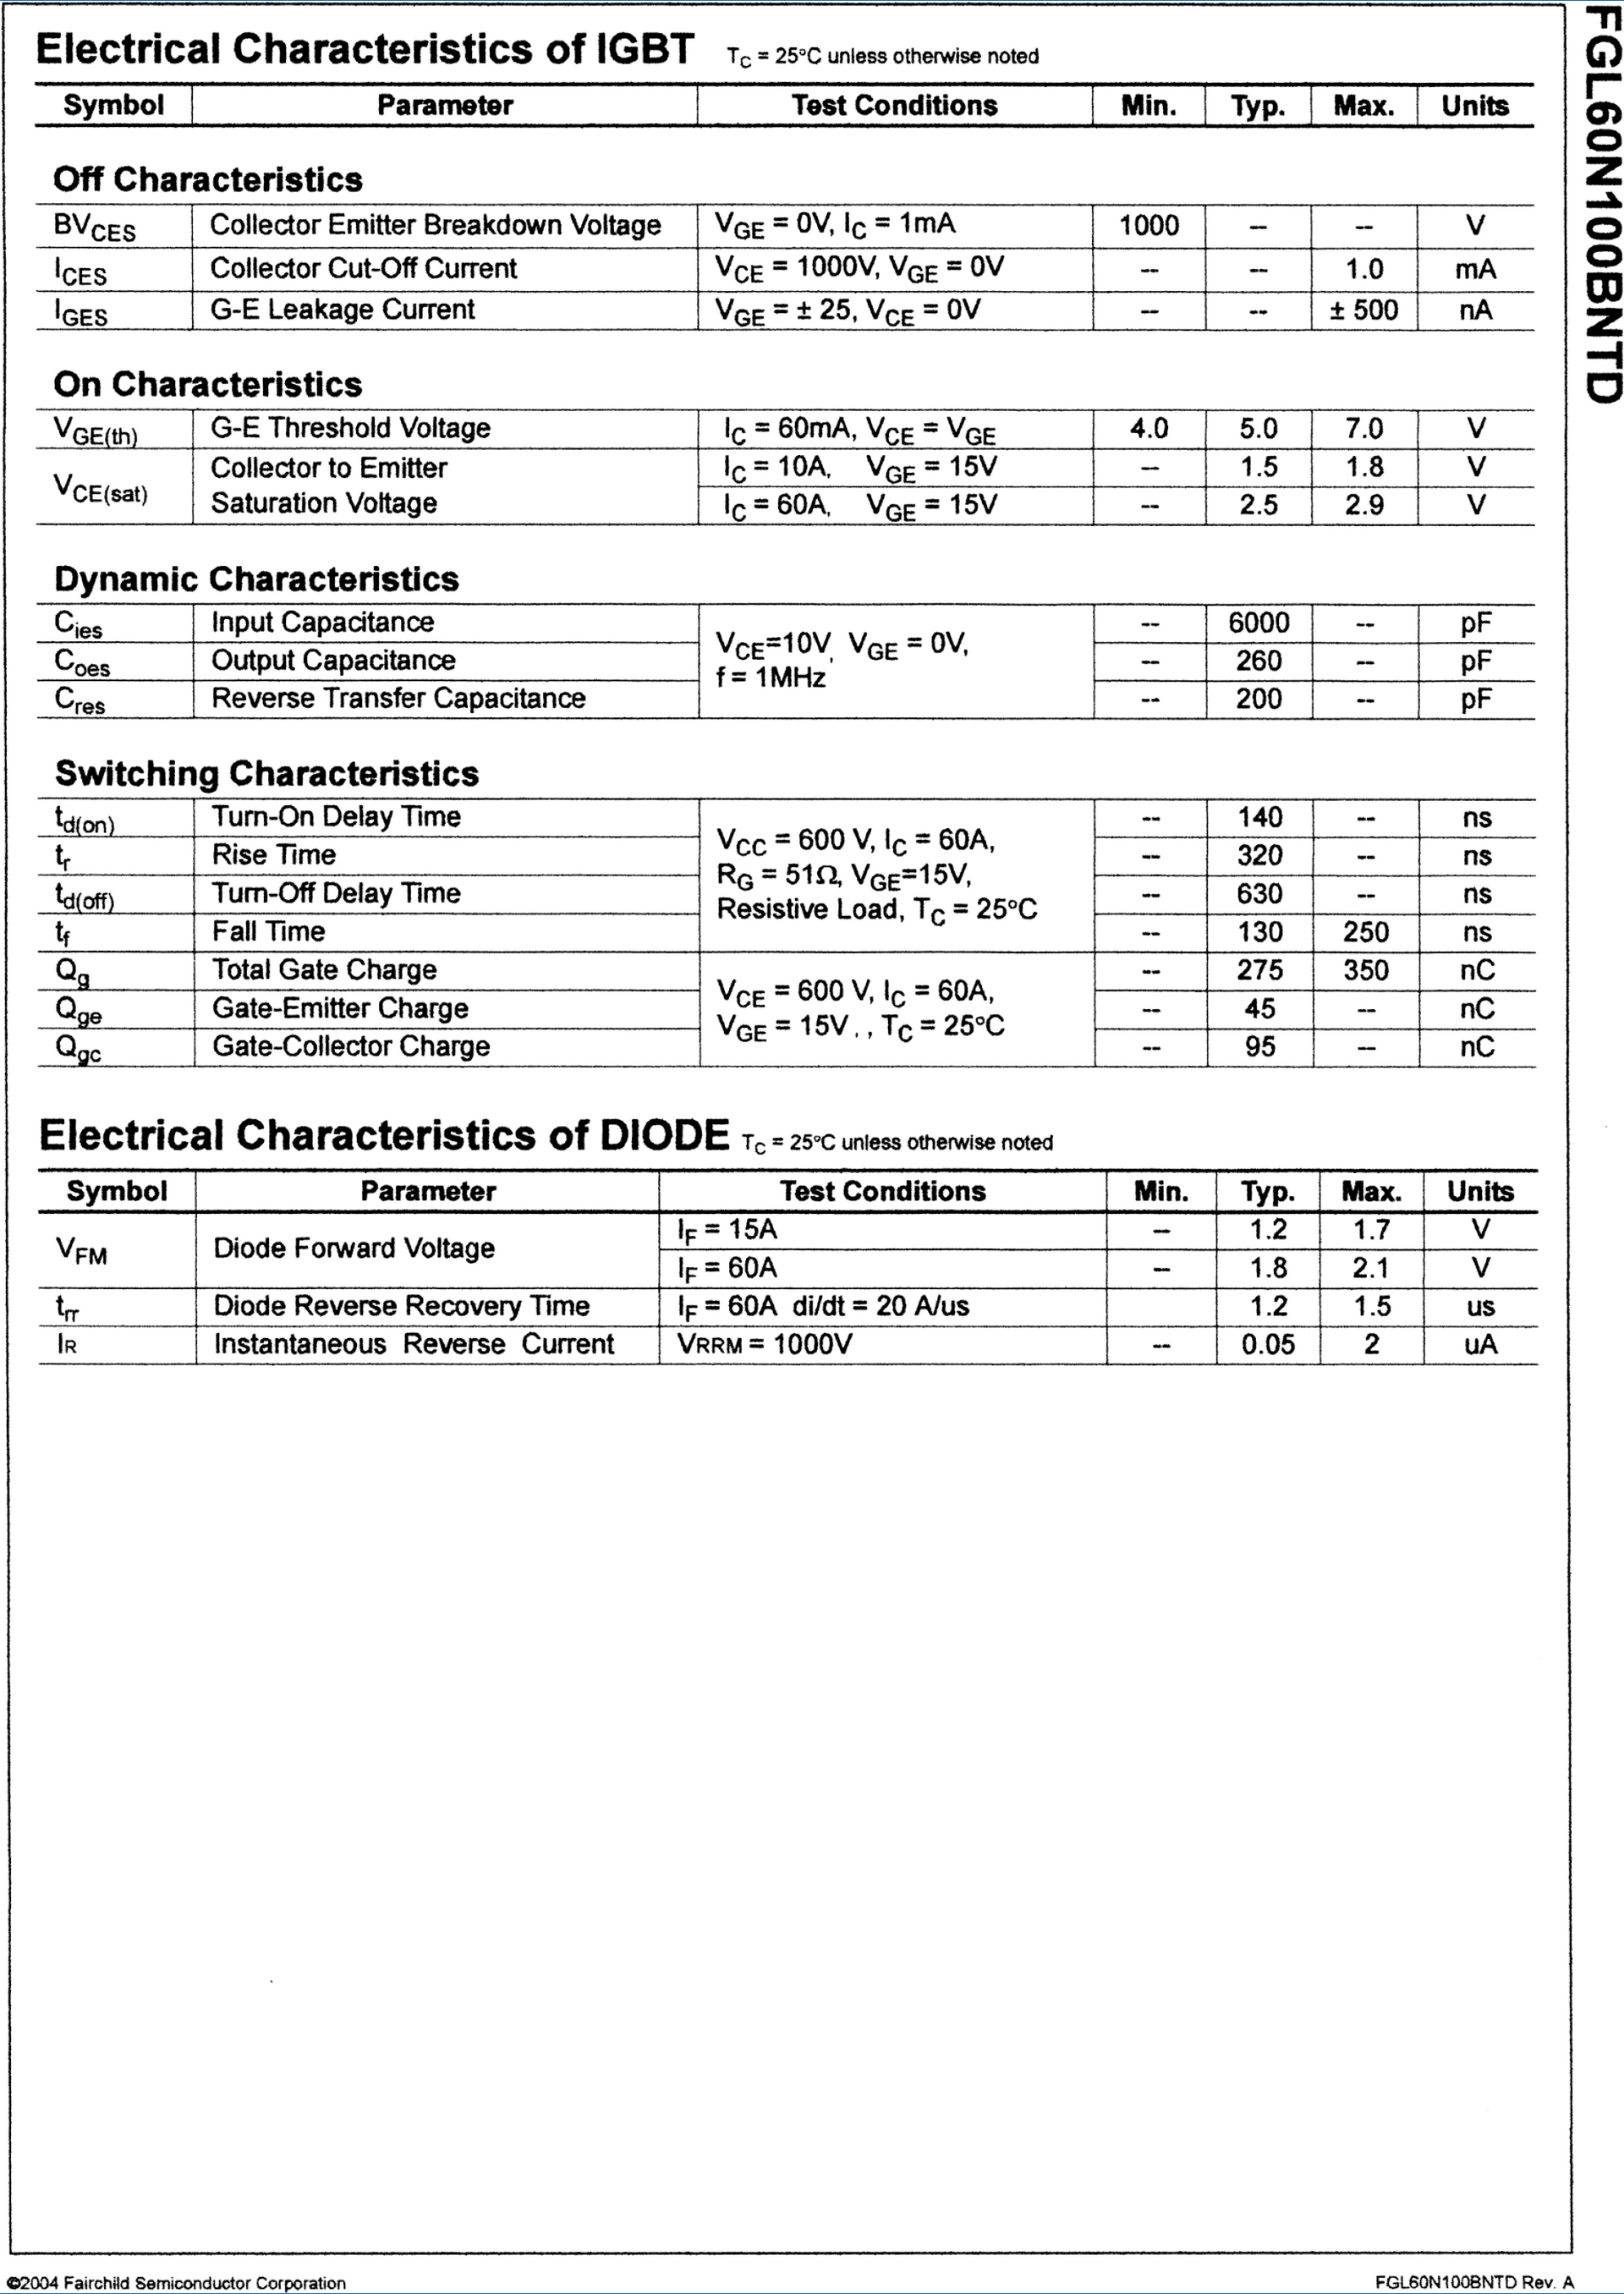 IGBT datasheet with Electrical characteristics 2